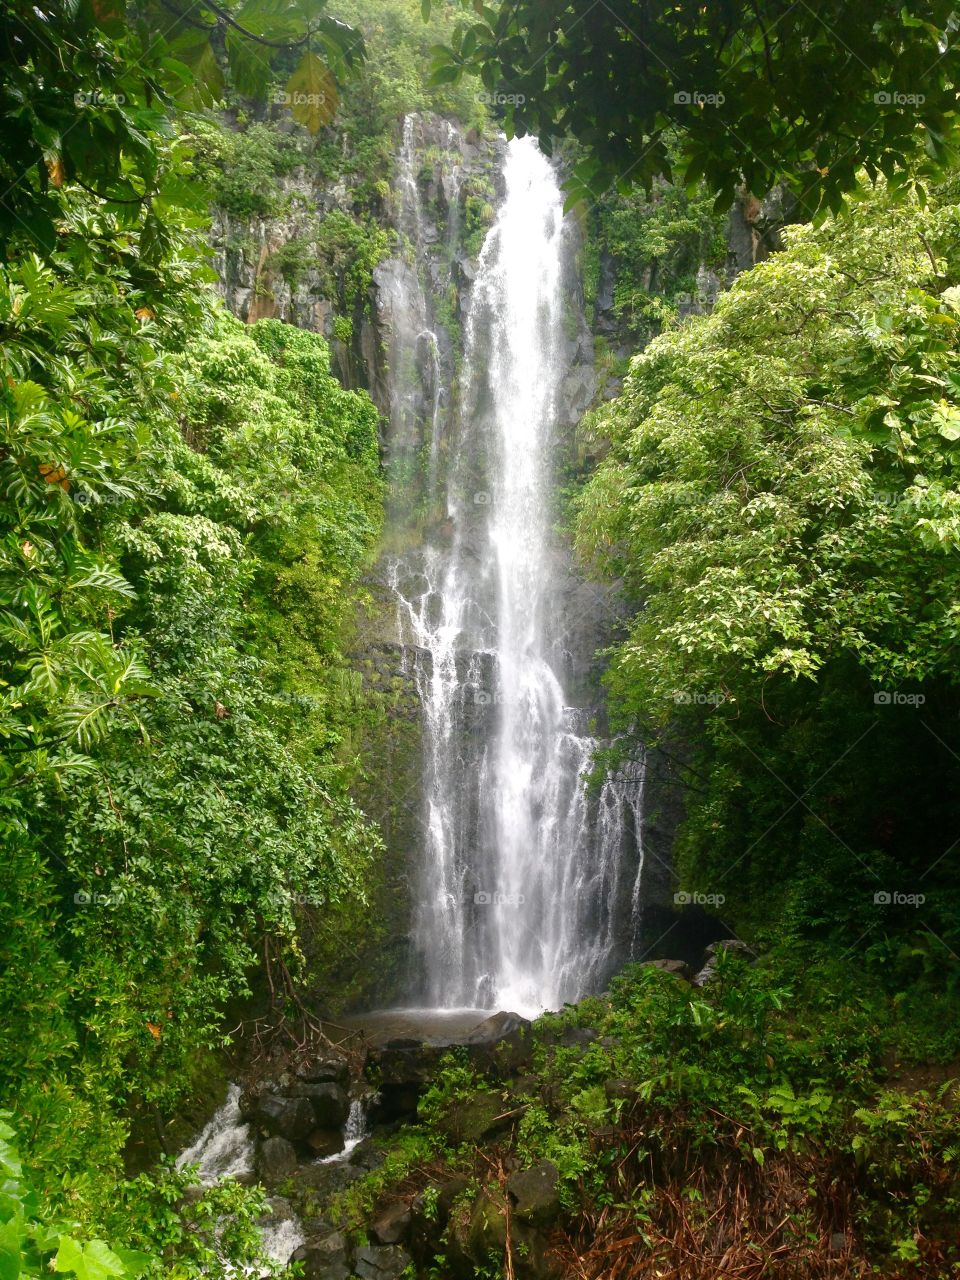 Waterfall is a reward. A reward after a hike in Maui